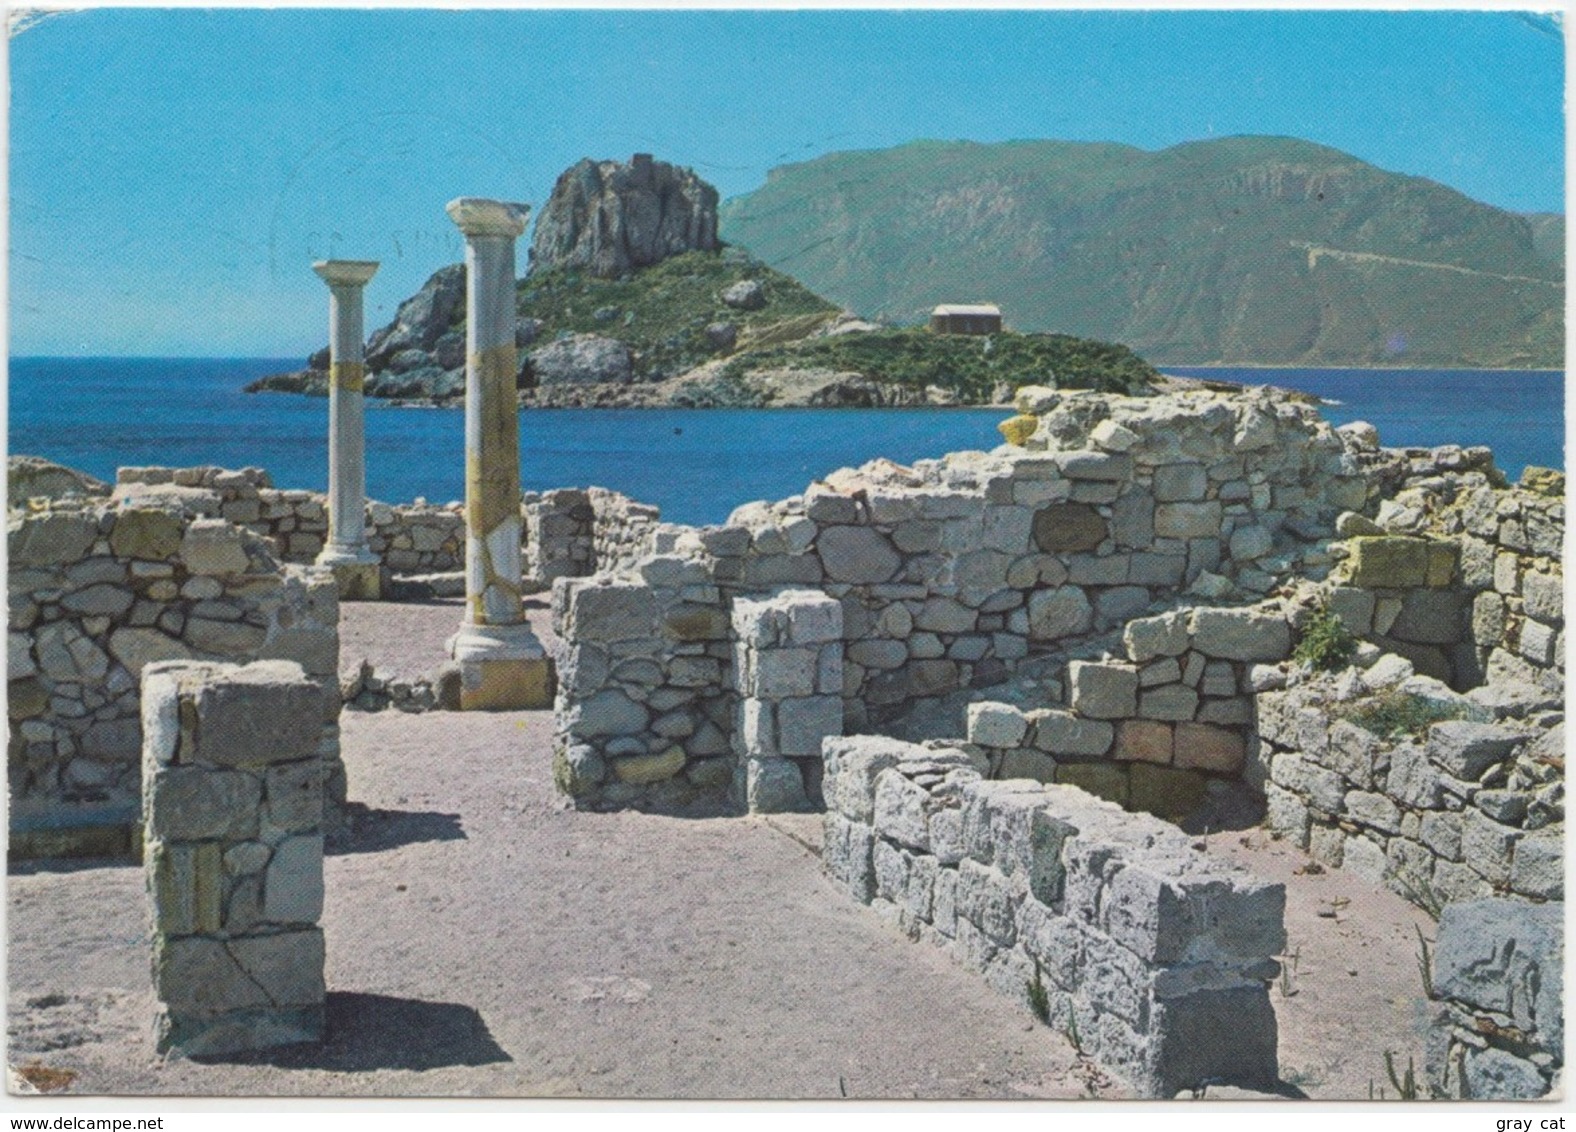 COS ISLAND, Basilica Of St. Stephen, Greece, 1977 Used Postcard [22093] - Greece